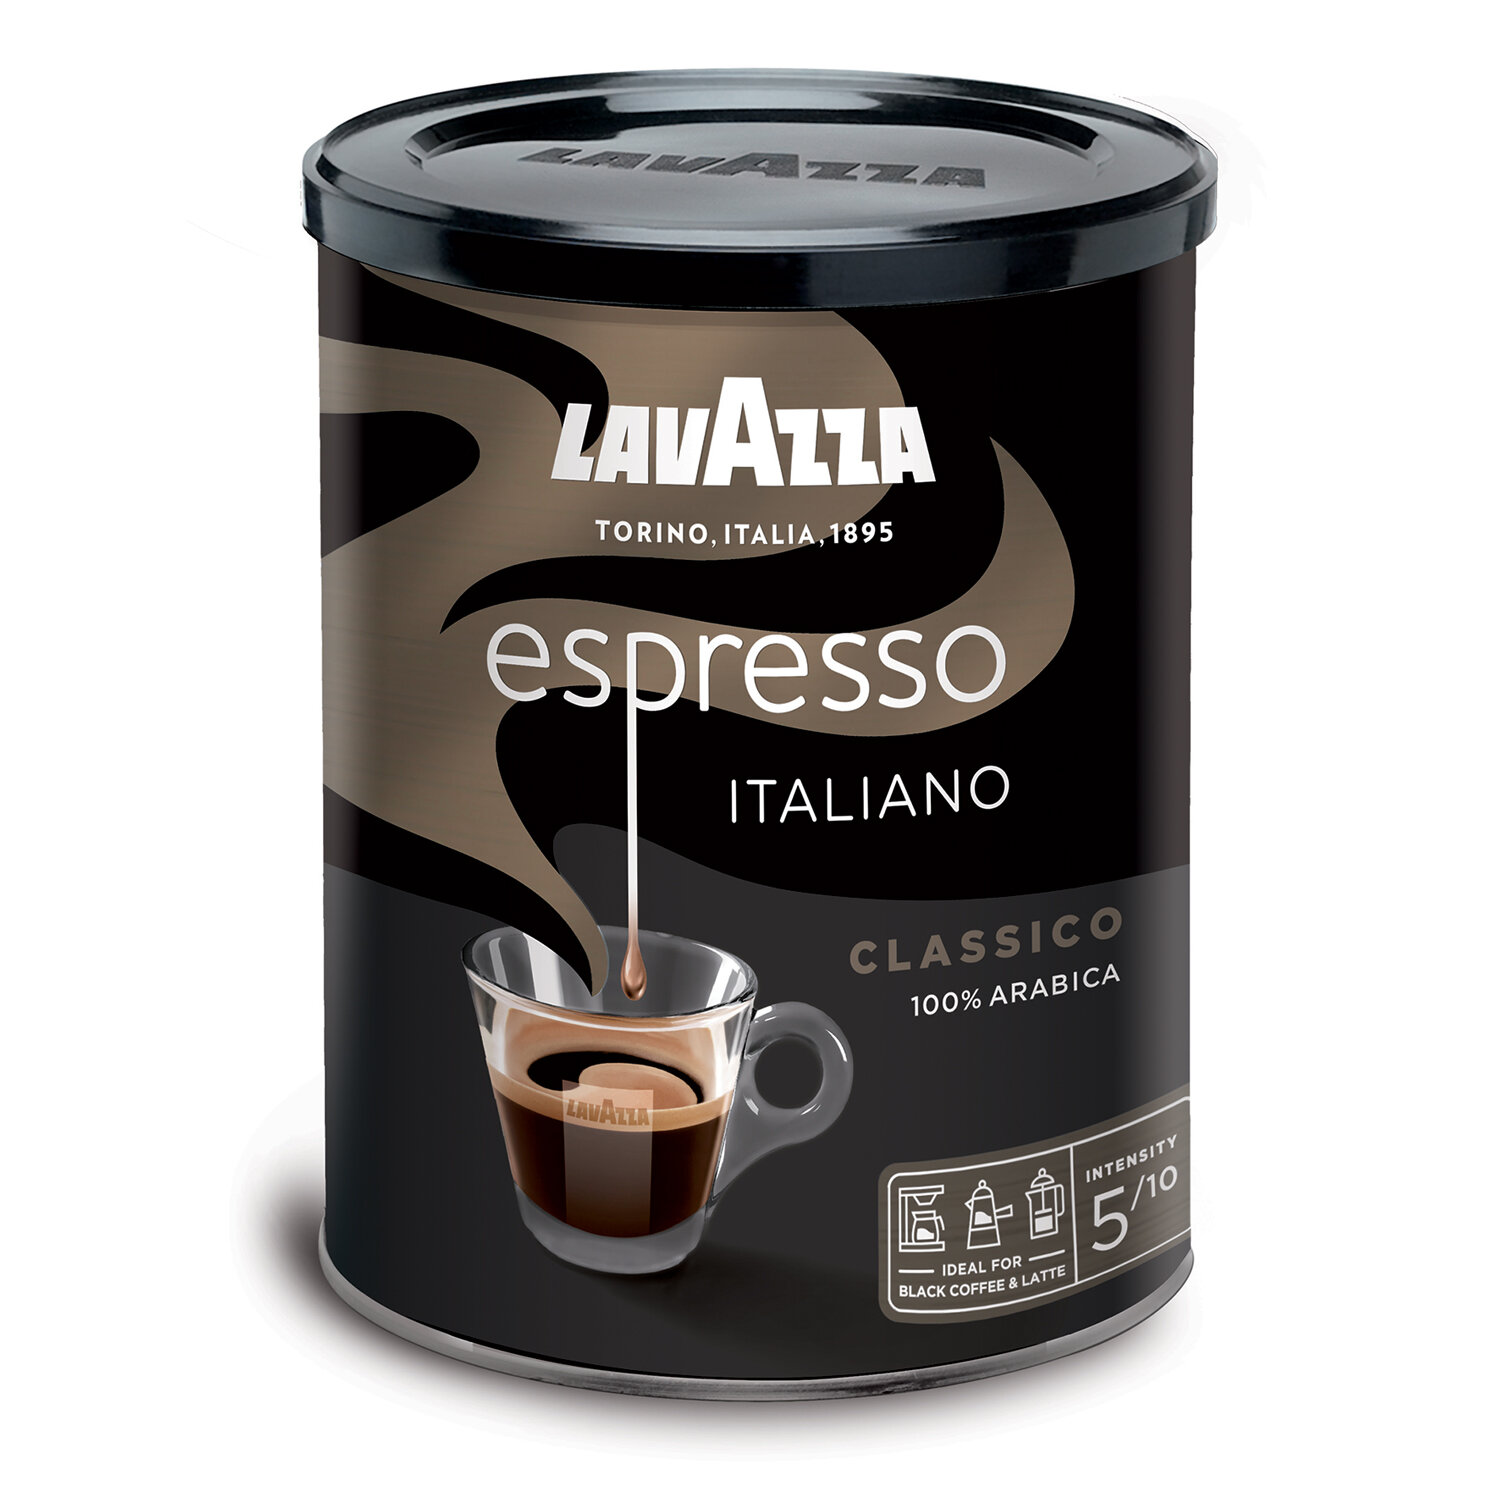 Кофе lavazza молотый 250. Кофе Лавацца эспрессо молотый в/у 250г. Кофе молотый Lavazza Caffe Espresso 250 гр. Кофе молотый Lavazza Espresso 250 гр. Кофе молотый Lavazza Espresso italiano Classico 250 г.